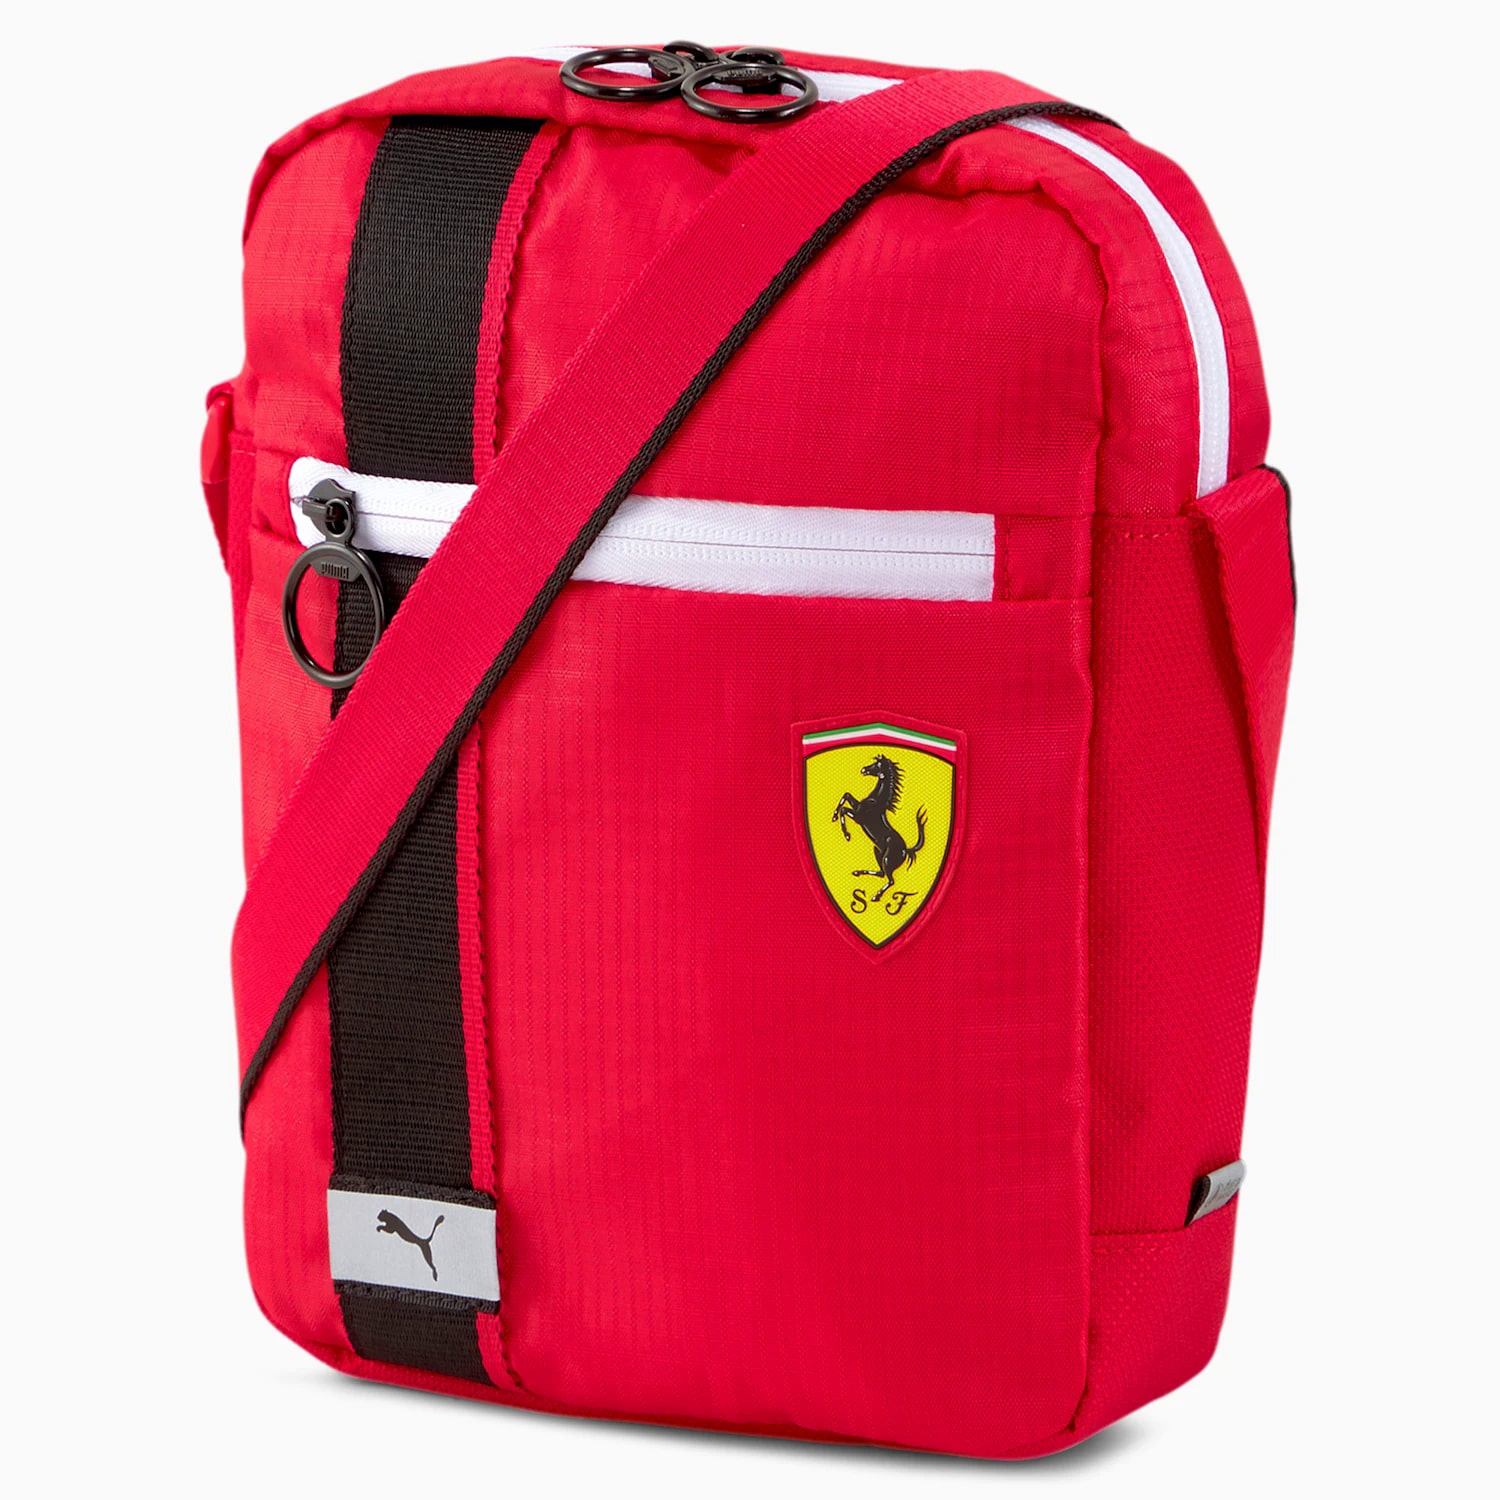 Sac à bandoulière Puma Scuderia Ferrari rouge vue devant avec bretelle